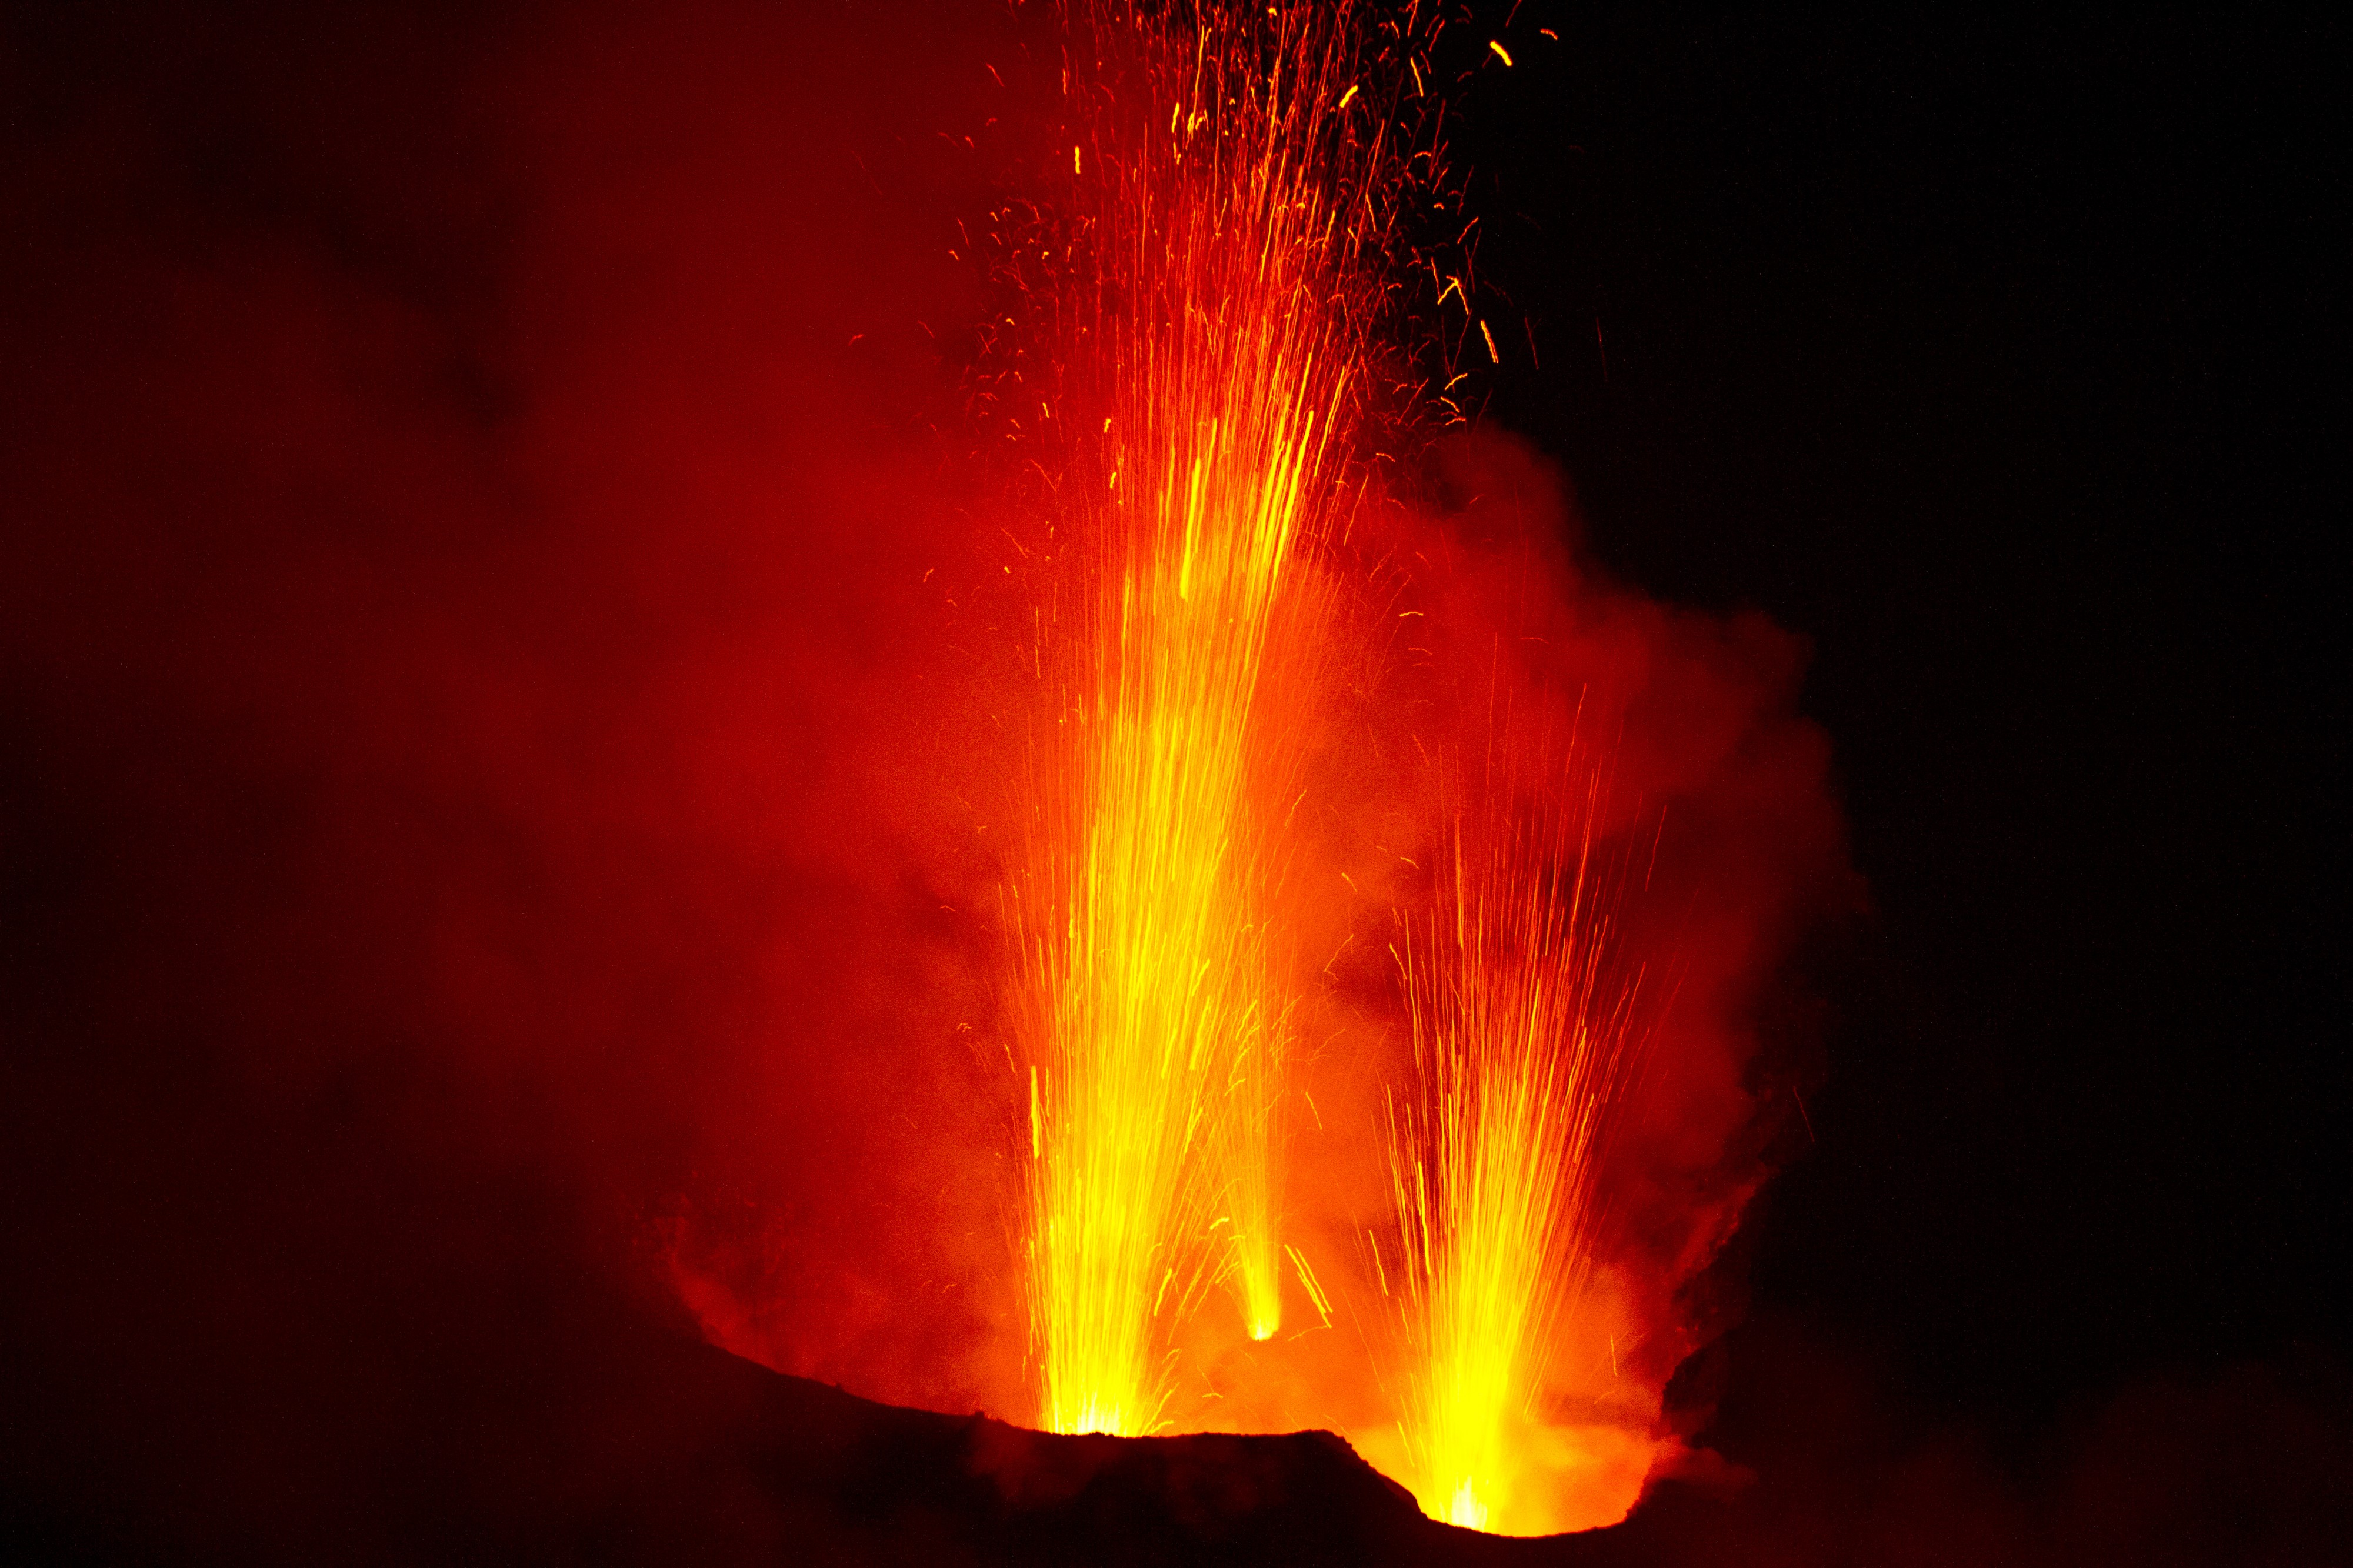 Stromboli. Eruptions of volcanic bombs1